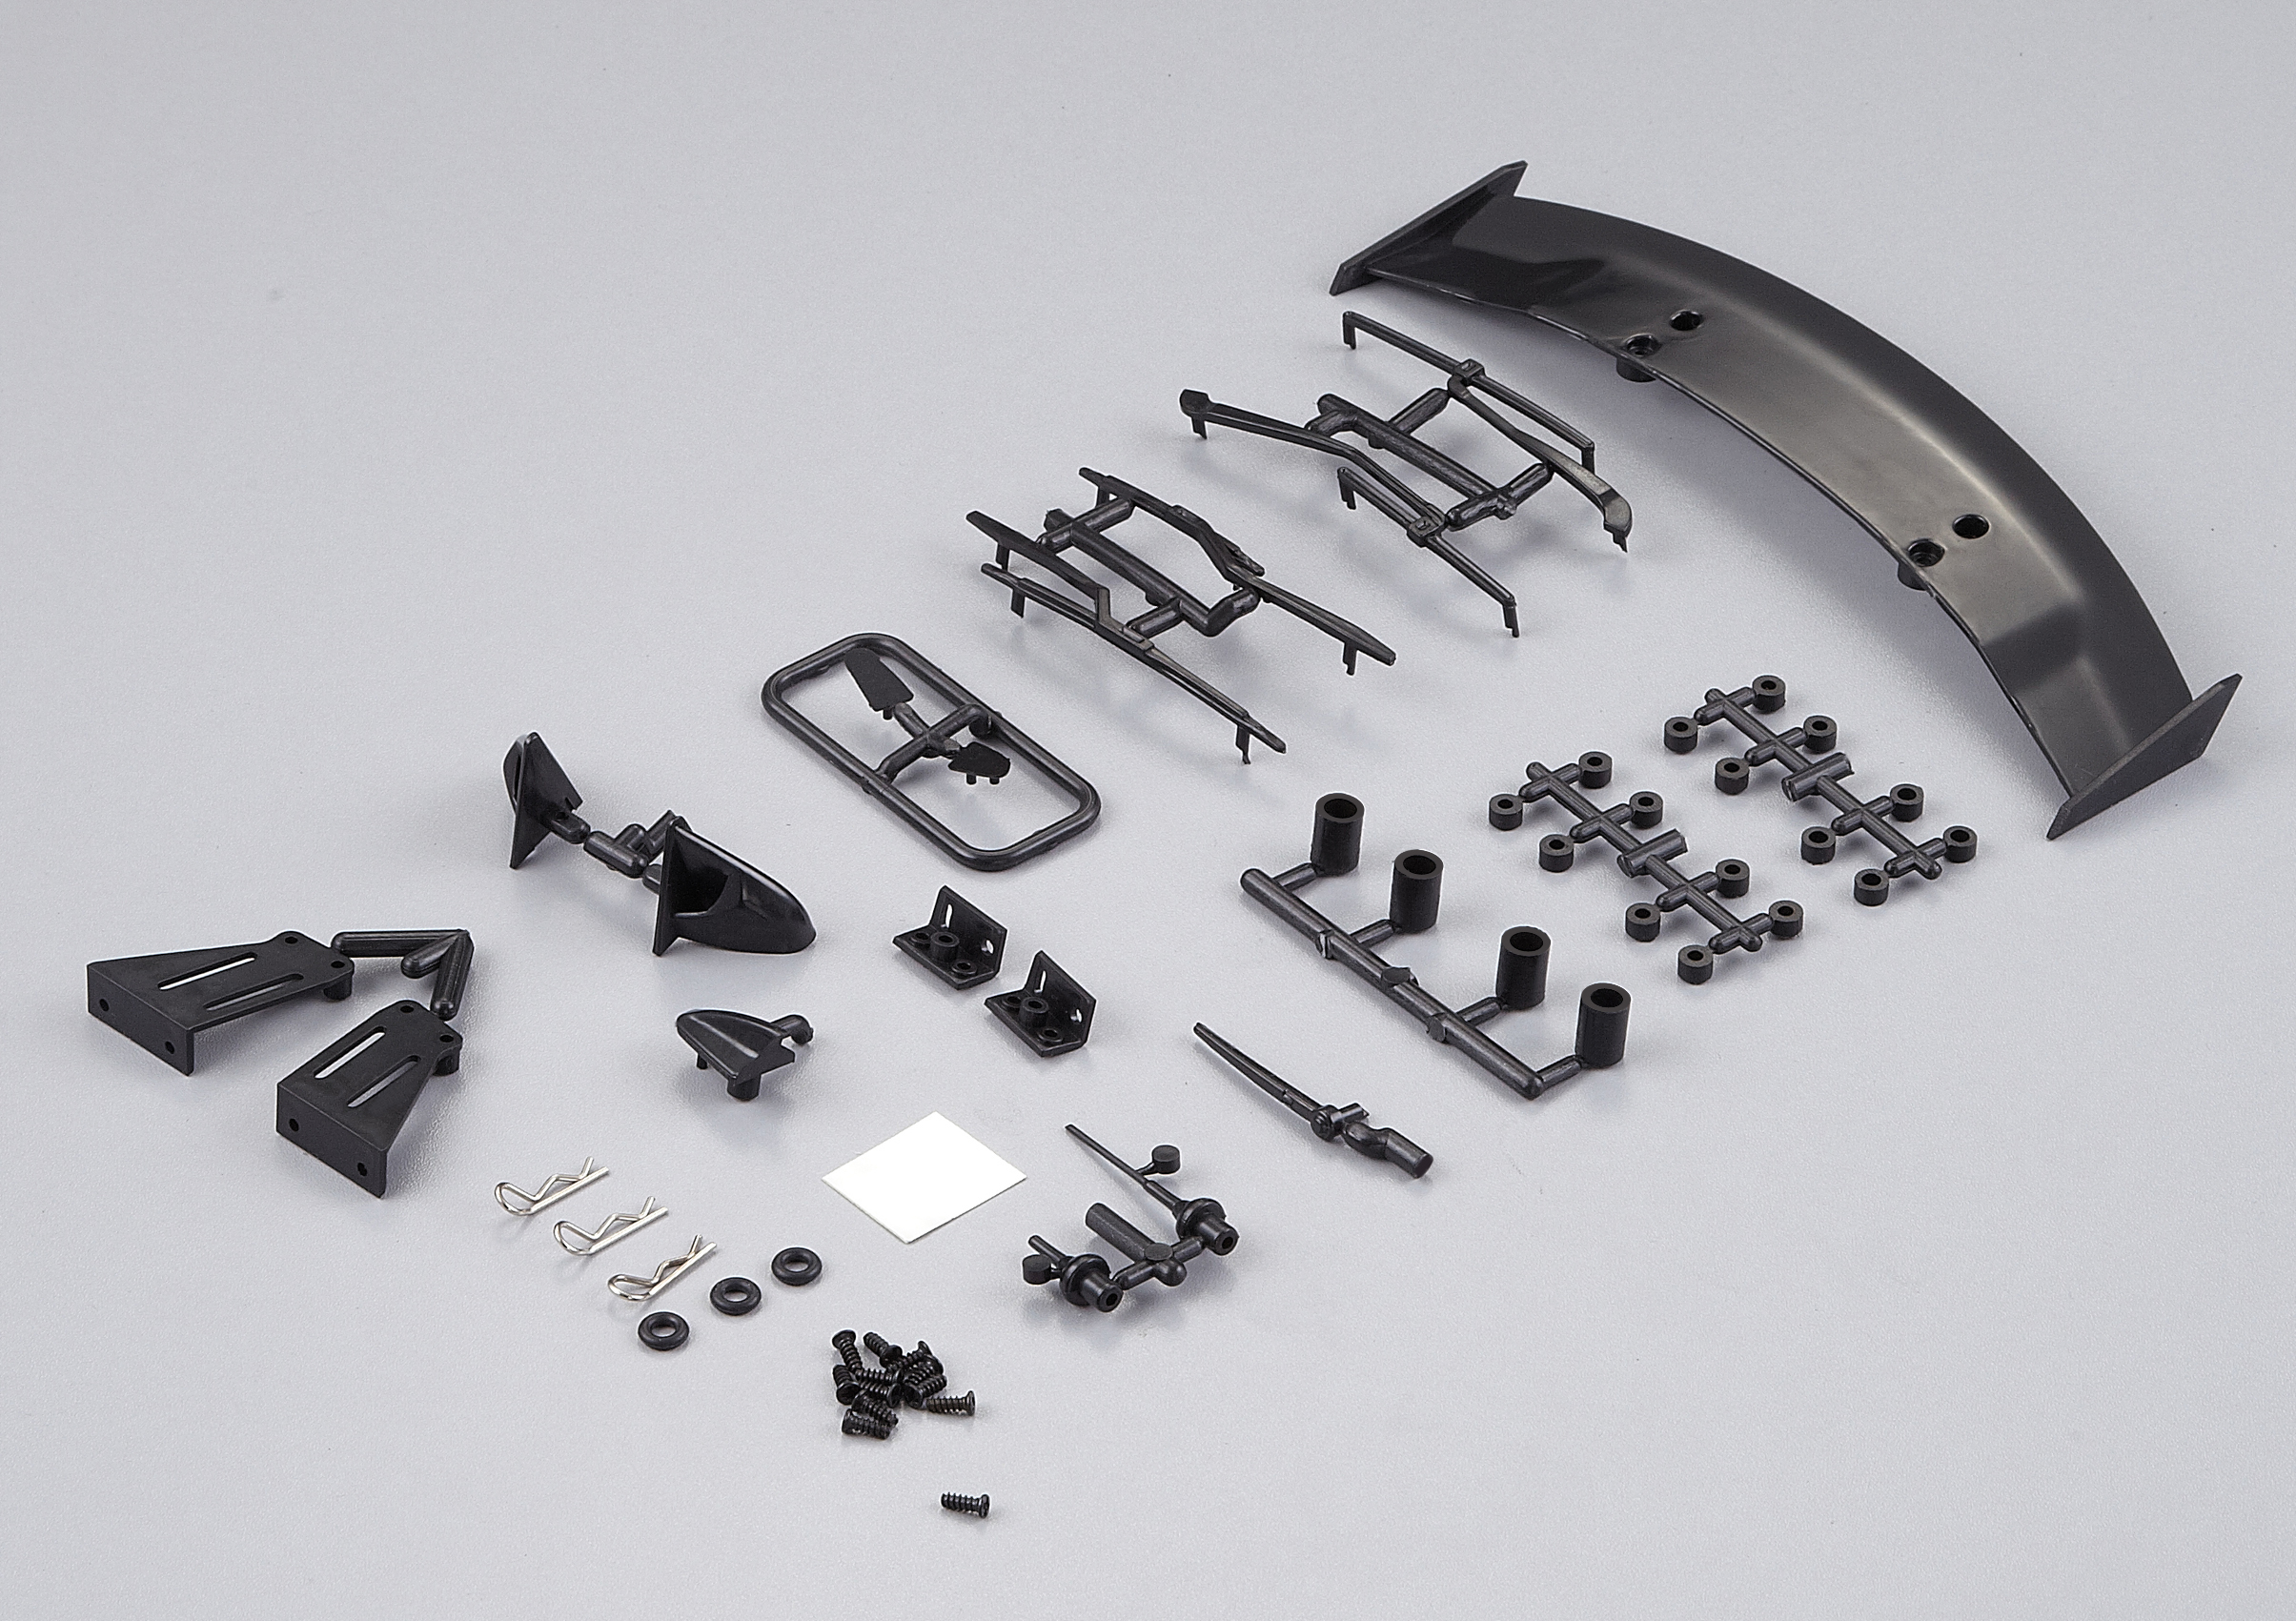 1//10 RC Car wing Accessories RC Drift Car Rear Spoiler Kit Parts